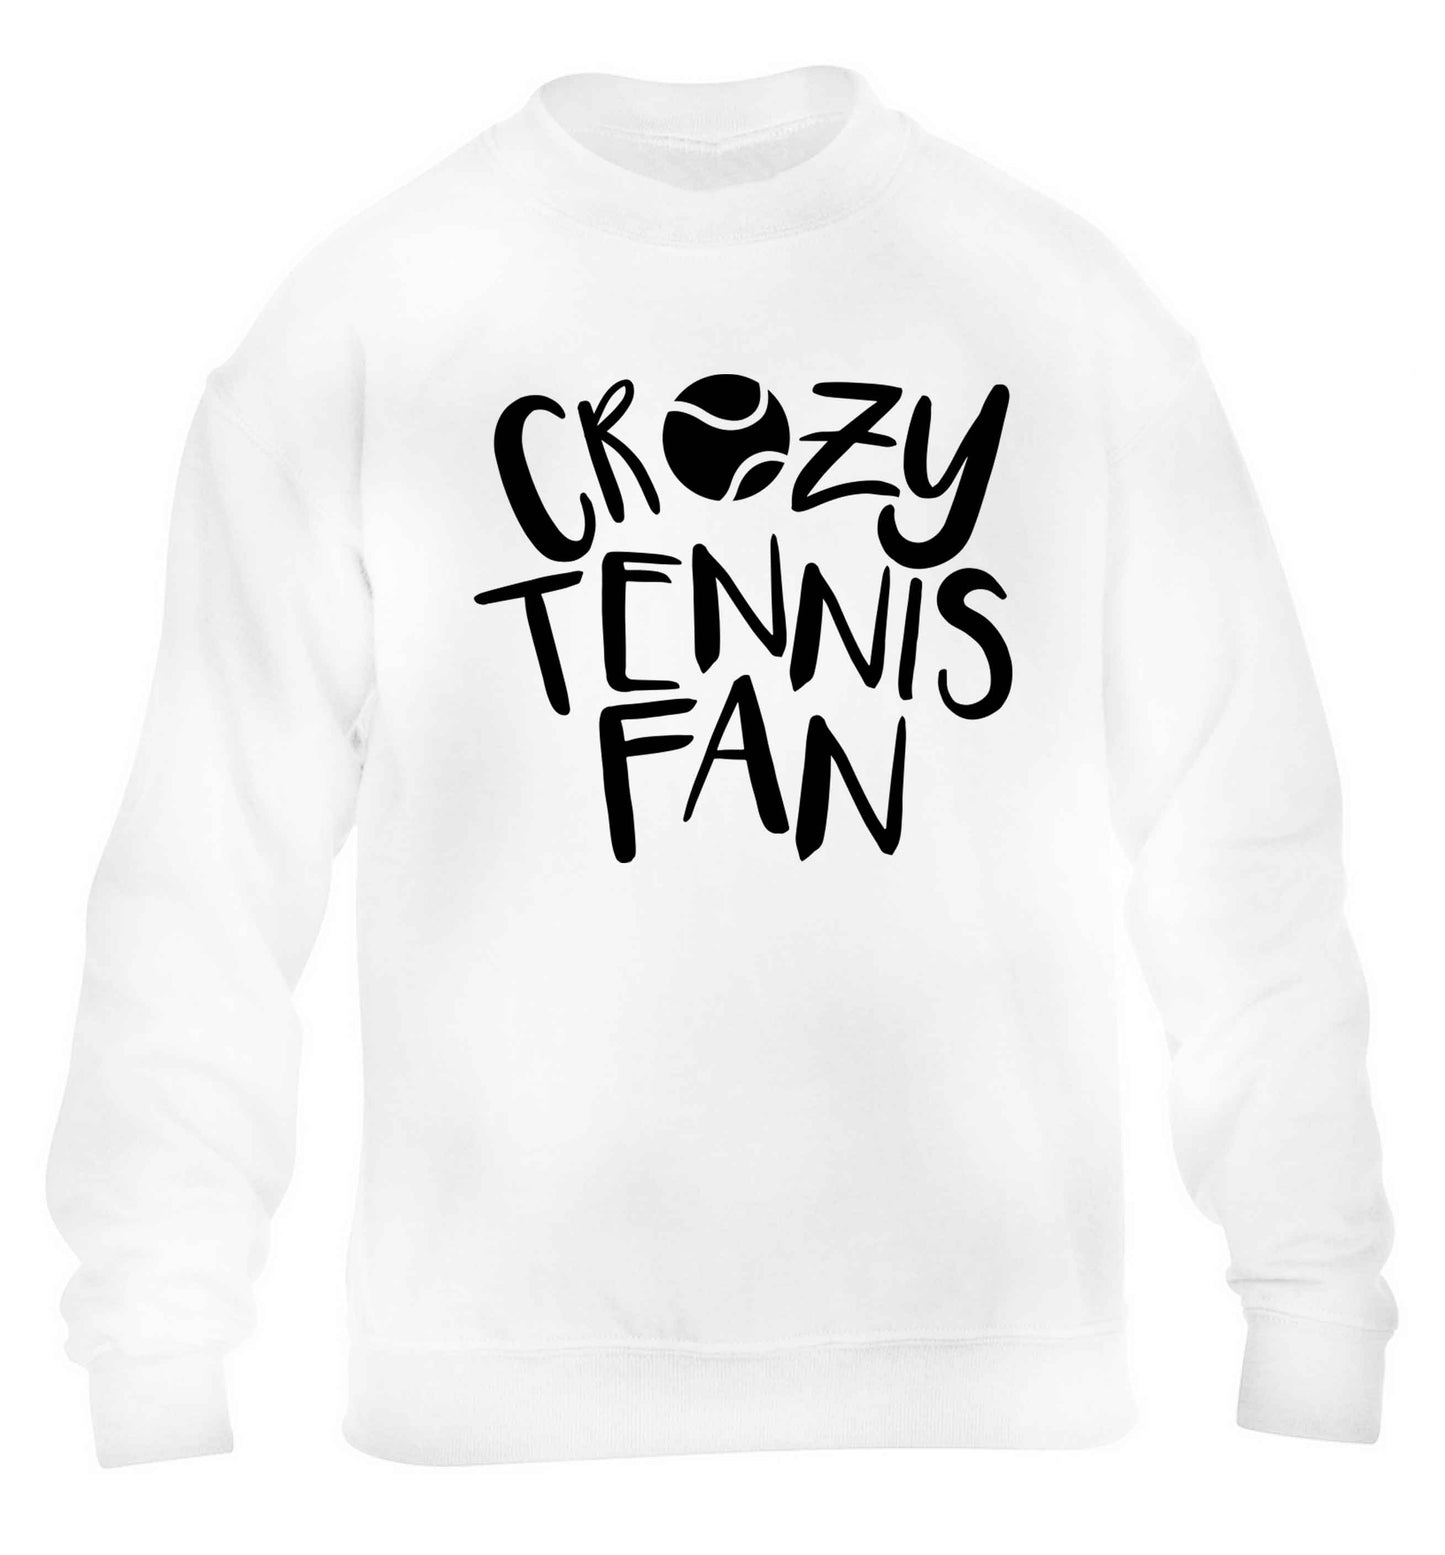 Crazy tennis fan children's white sweater 12-13 Years